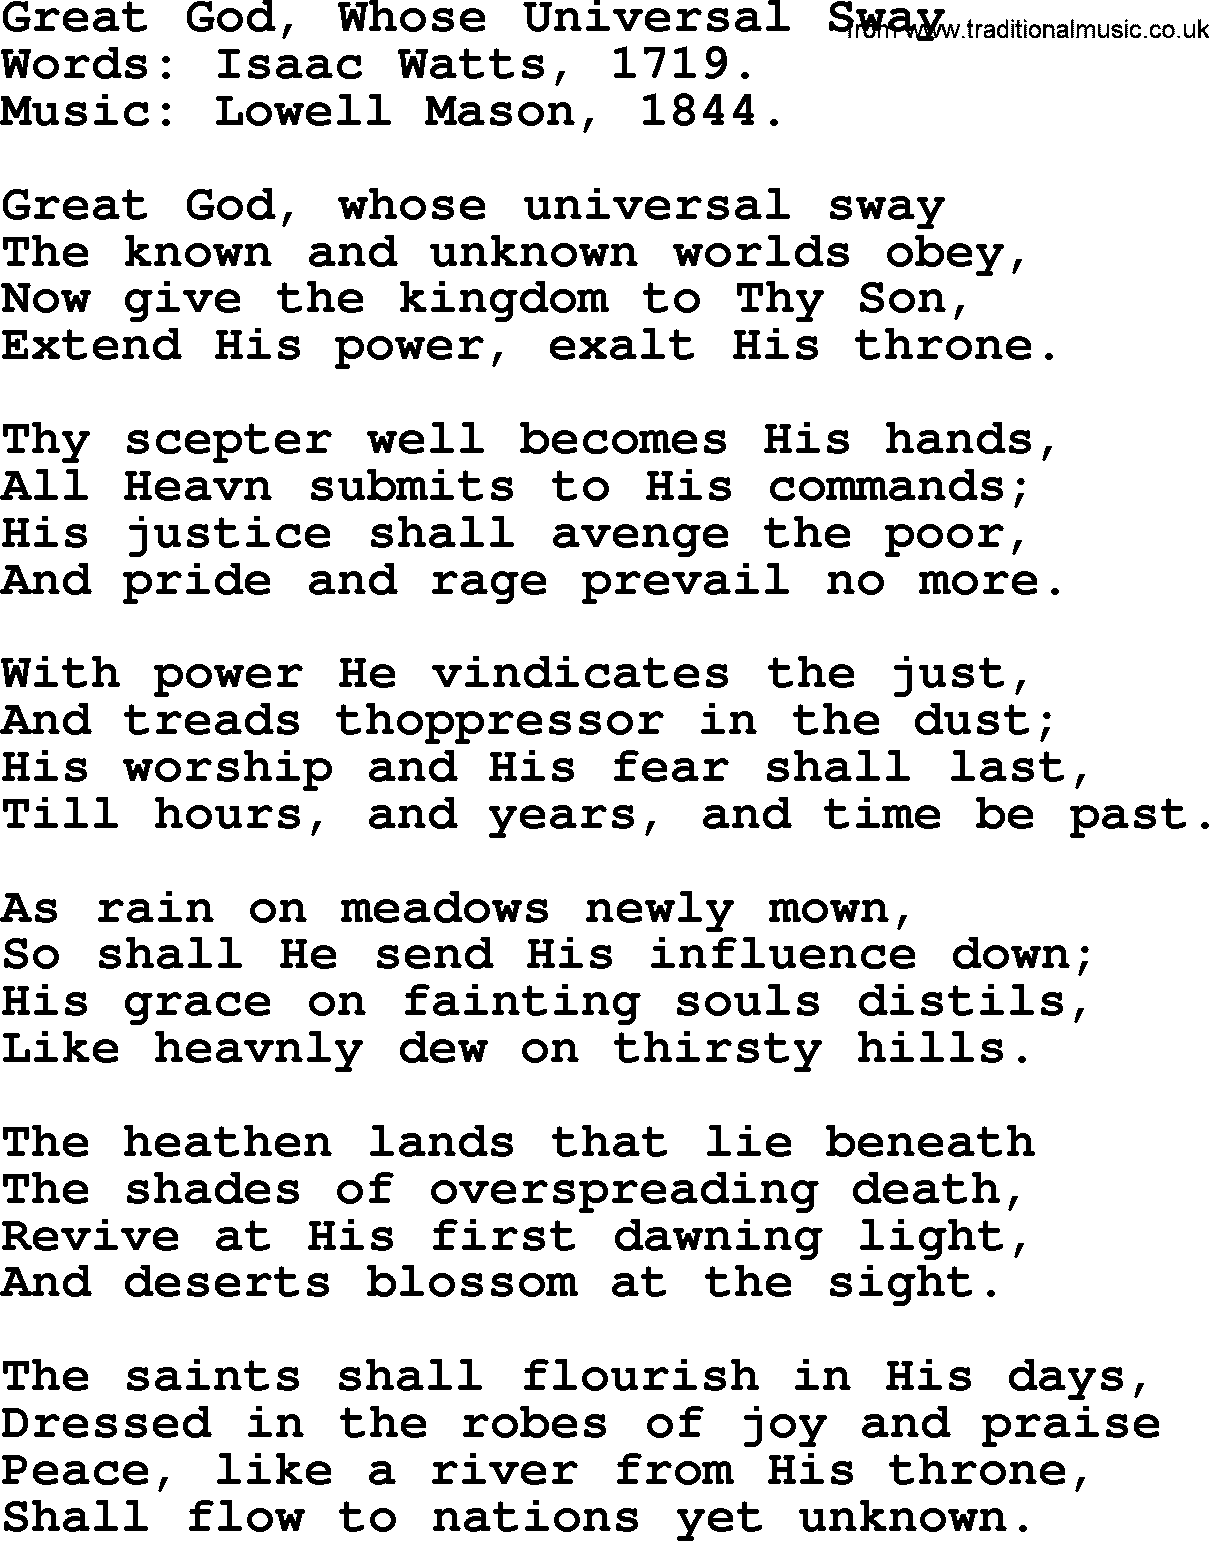 Isaac Watts Christian hymn: Great God, Whose Universal Sway- lyricss